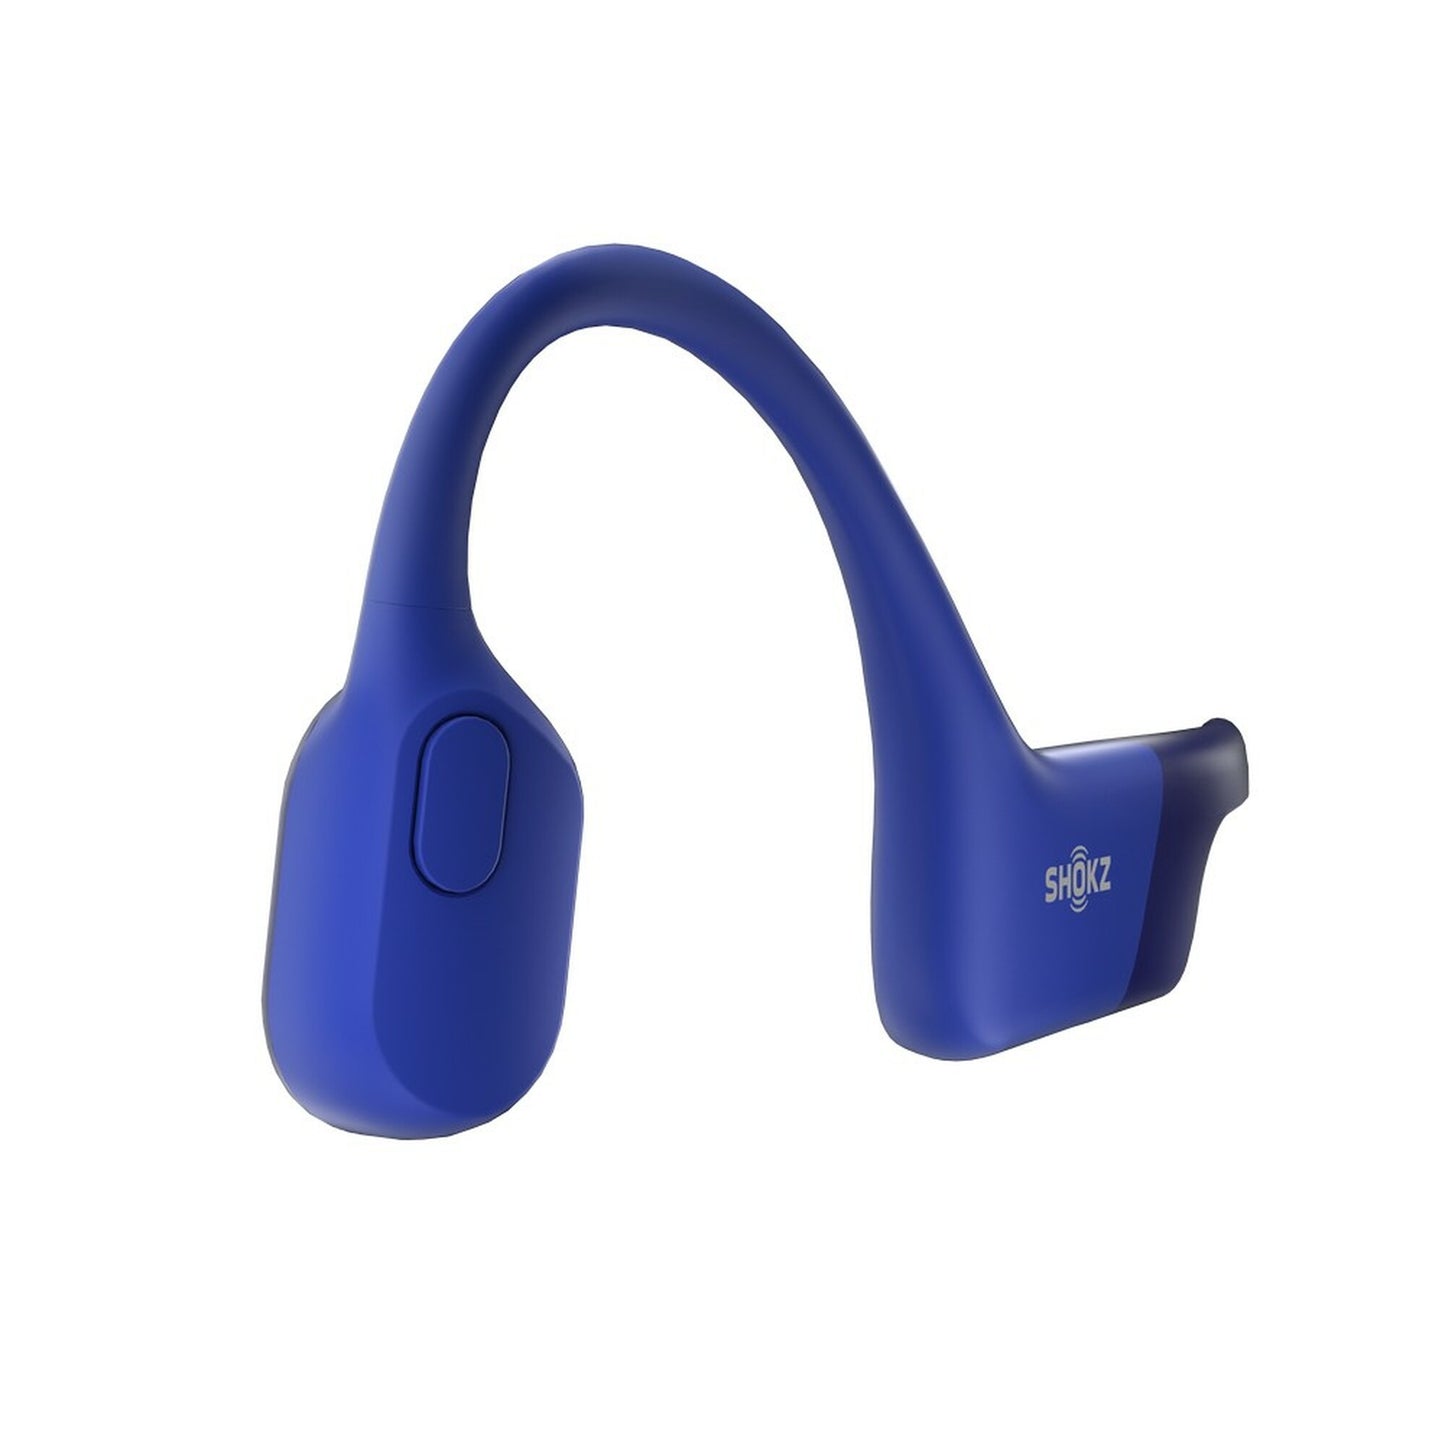 SHOKZ OPENRUN Mini Bone Conduction Open-Ear Headphones (Blue)